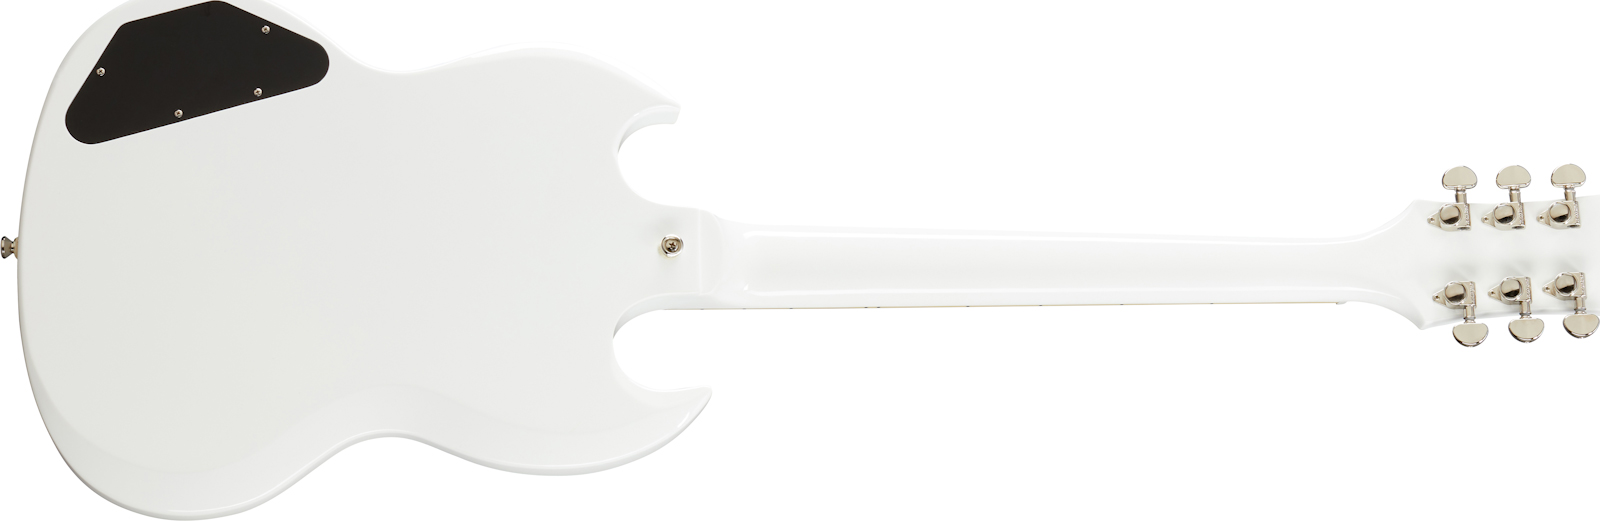 Epiphone Sg Standard Lh Gaucher 2h Ht Lau - Alpine White - Left-handed electric guitar - Variation 1